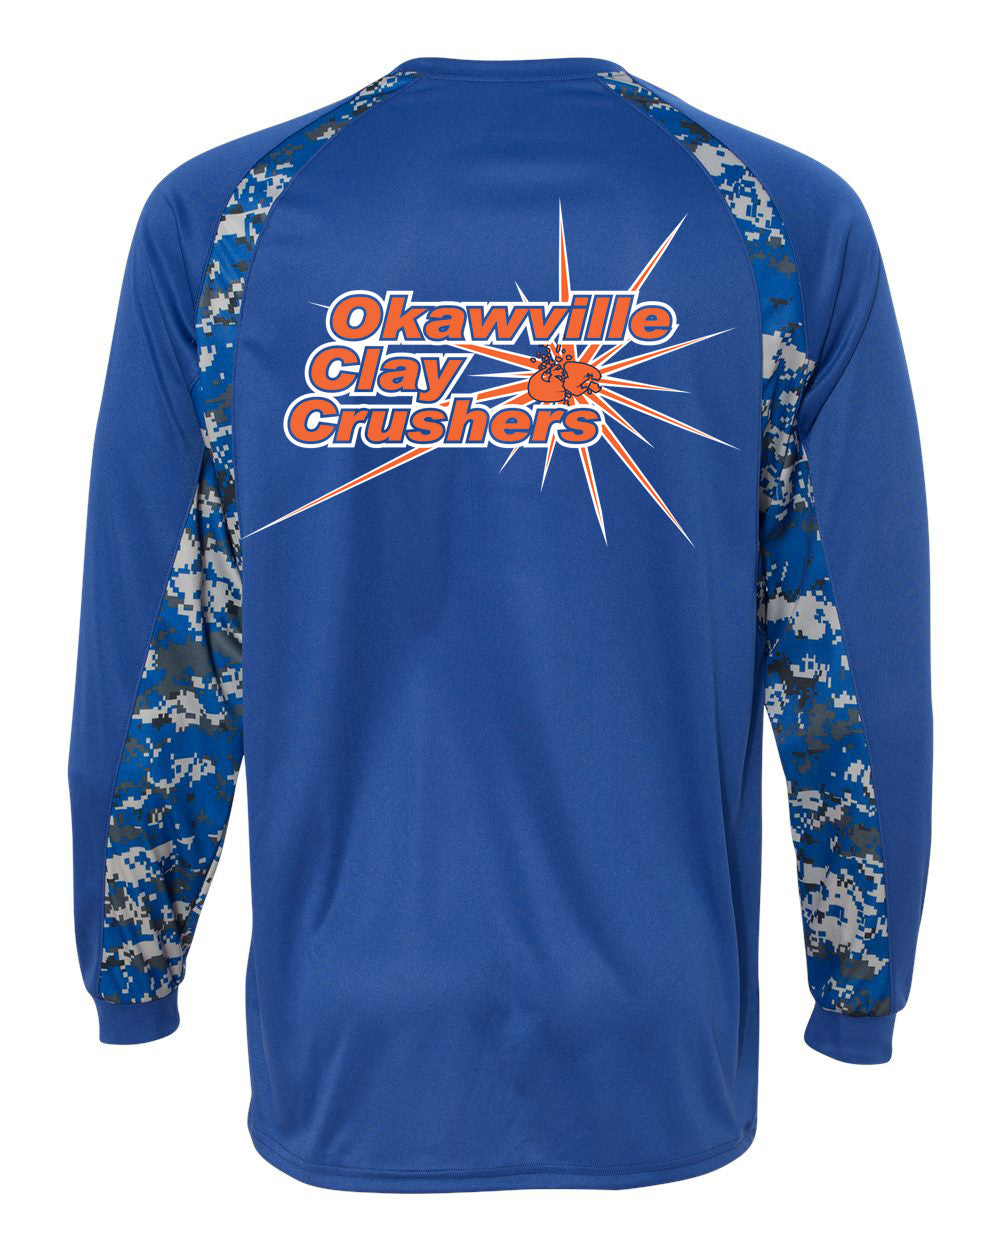 Okaville Clay Crushers Digital Camo Hook Long Sleeve T-Shirt